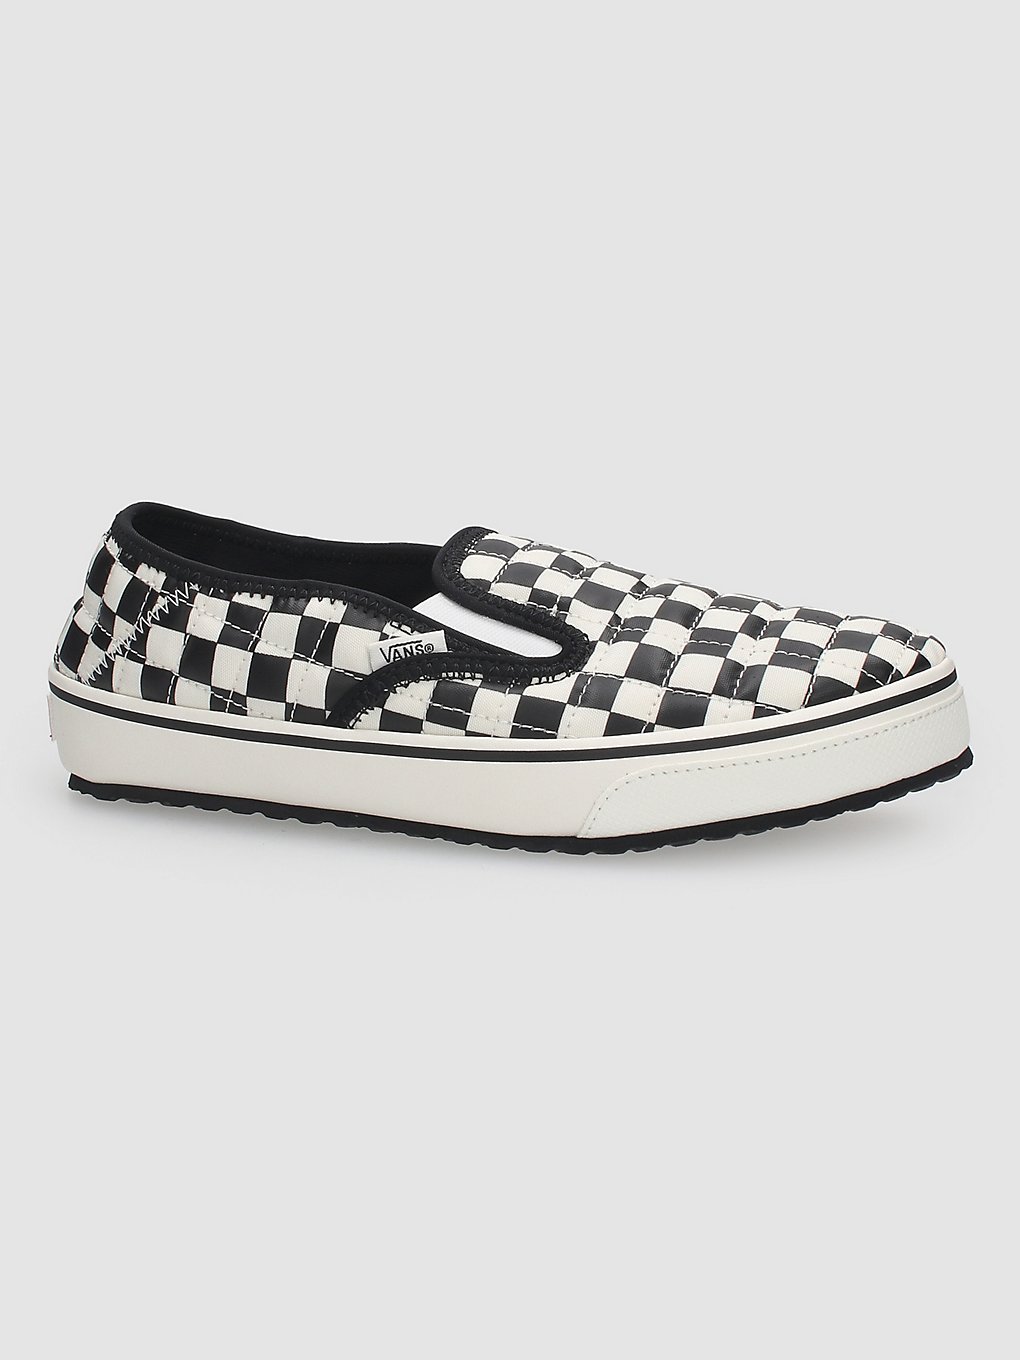 Vans Checkerboard Slip-er 2 Shoes classic white